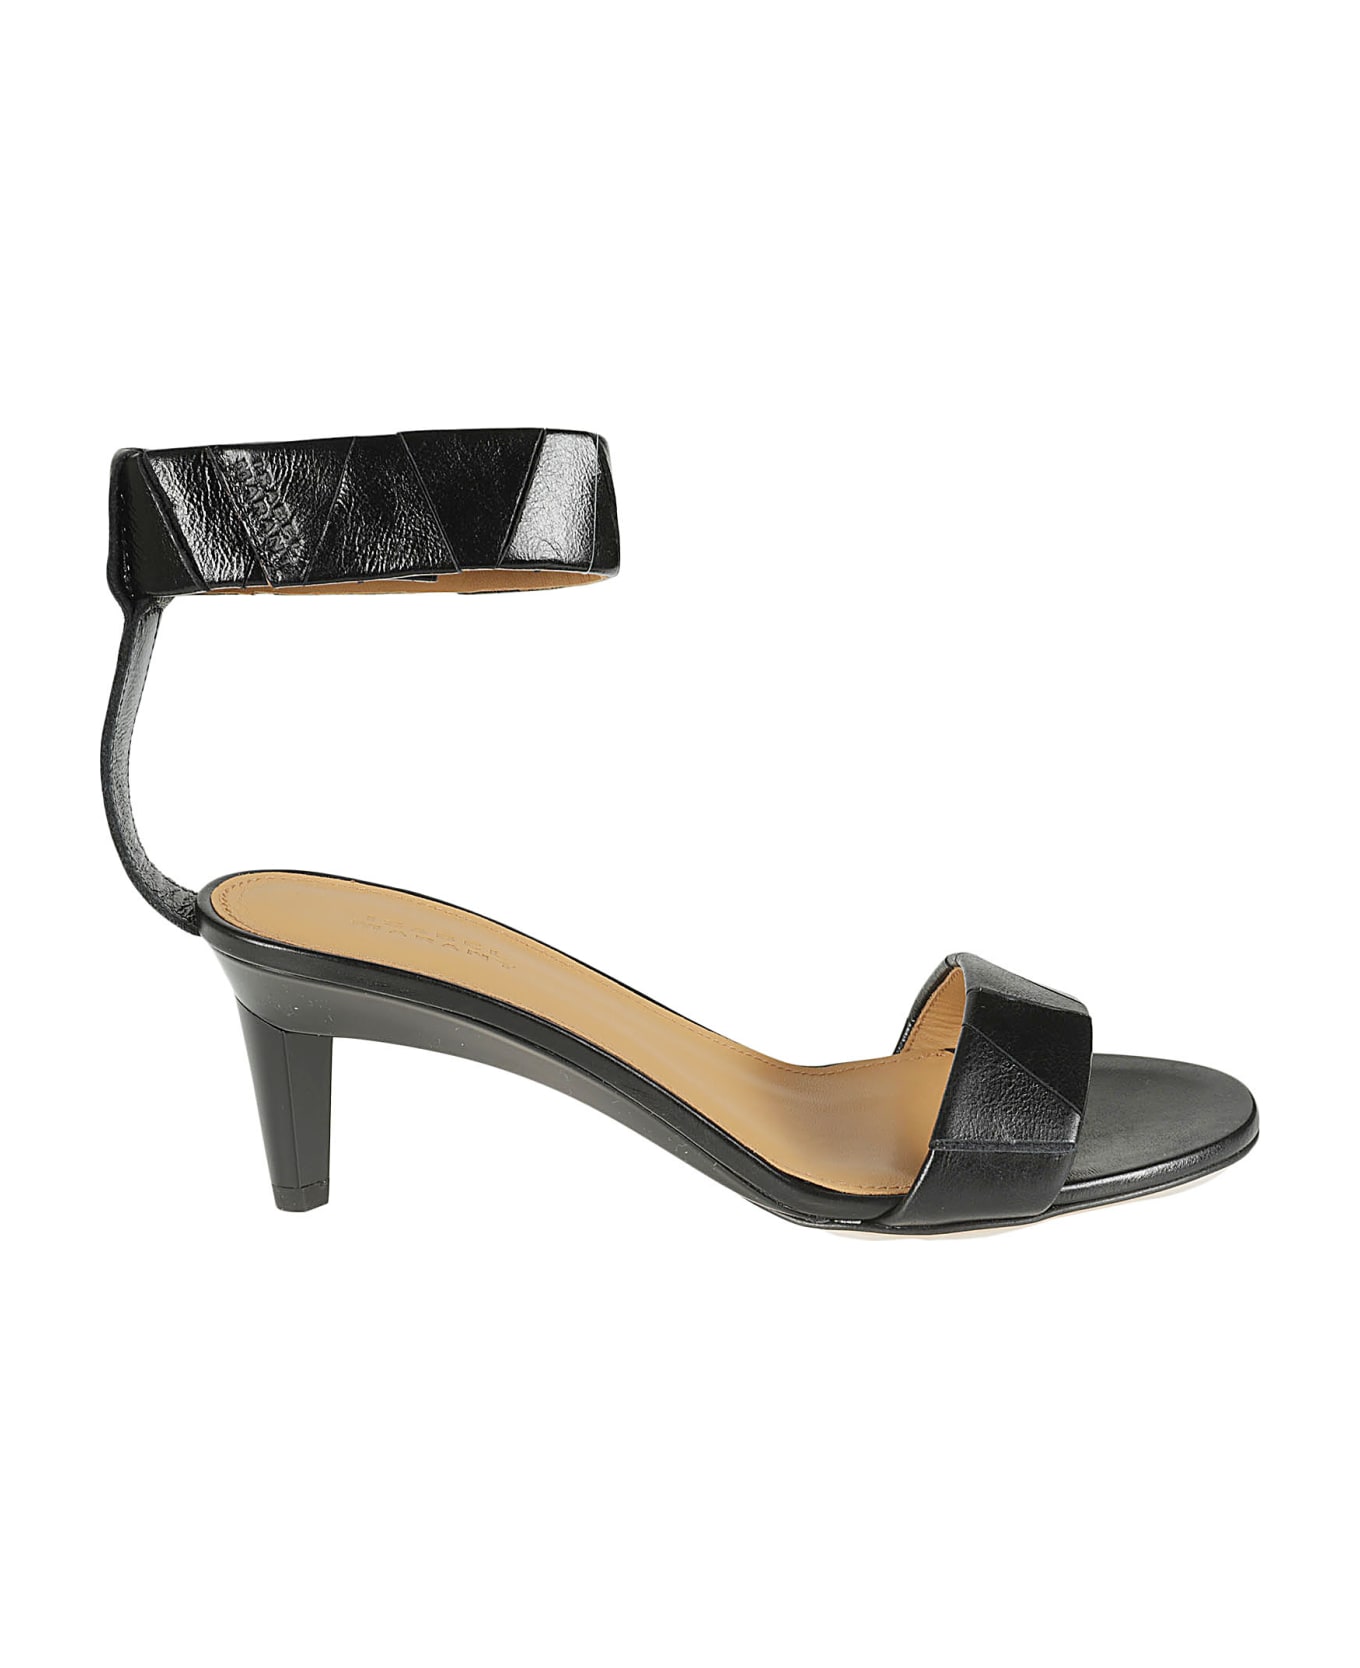 Isabel Marant Ankle Strap Sandals - Black サンダル